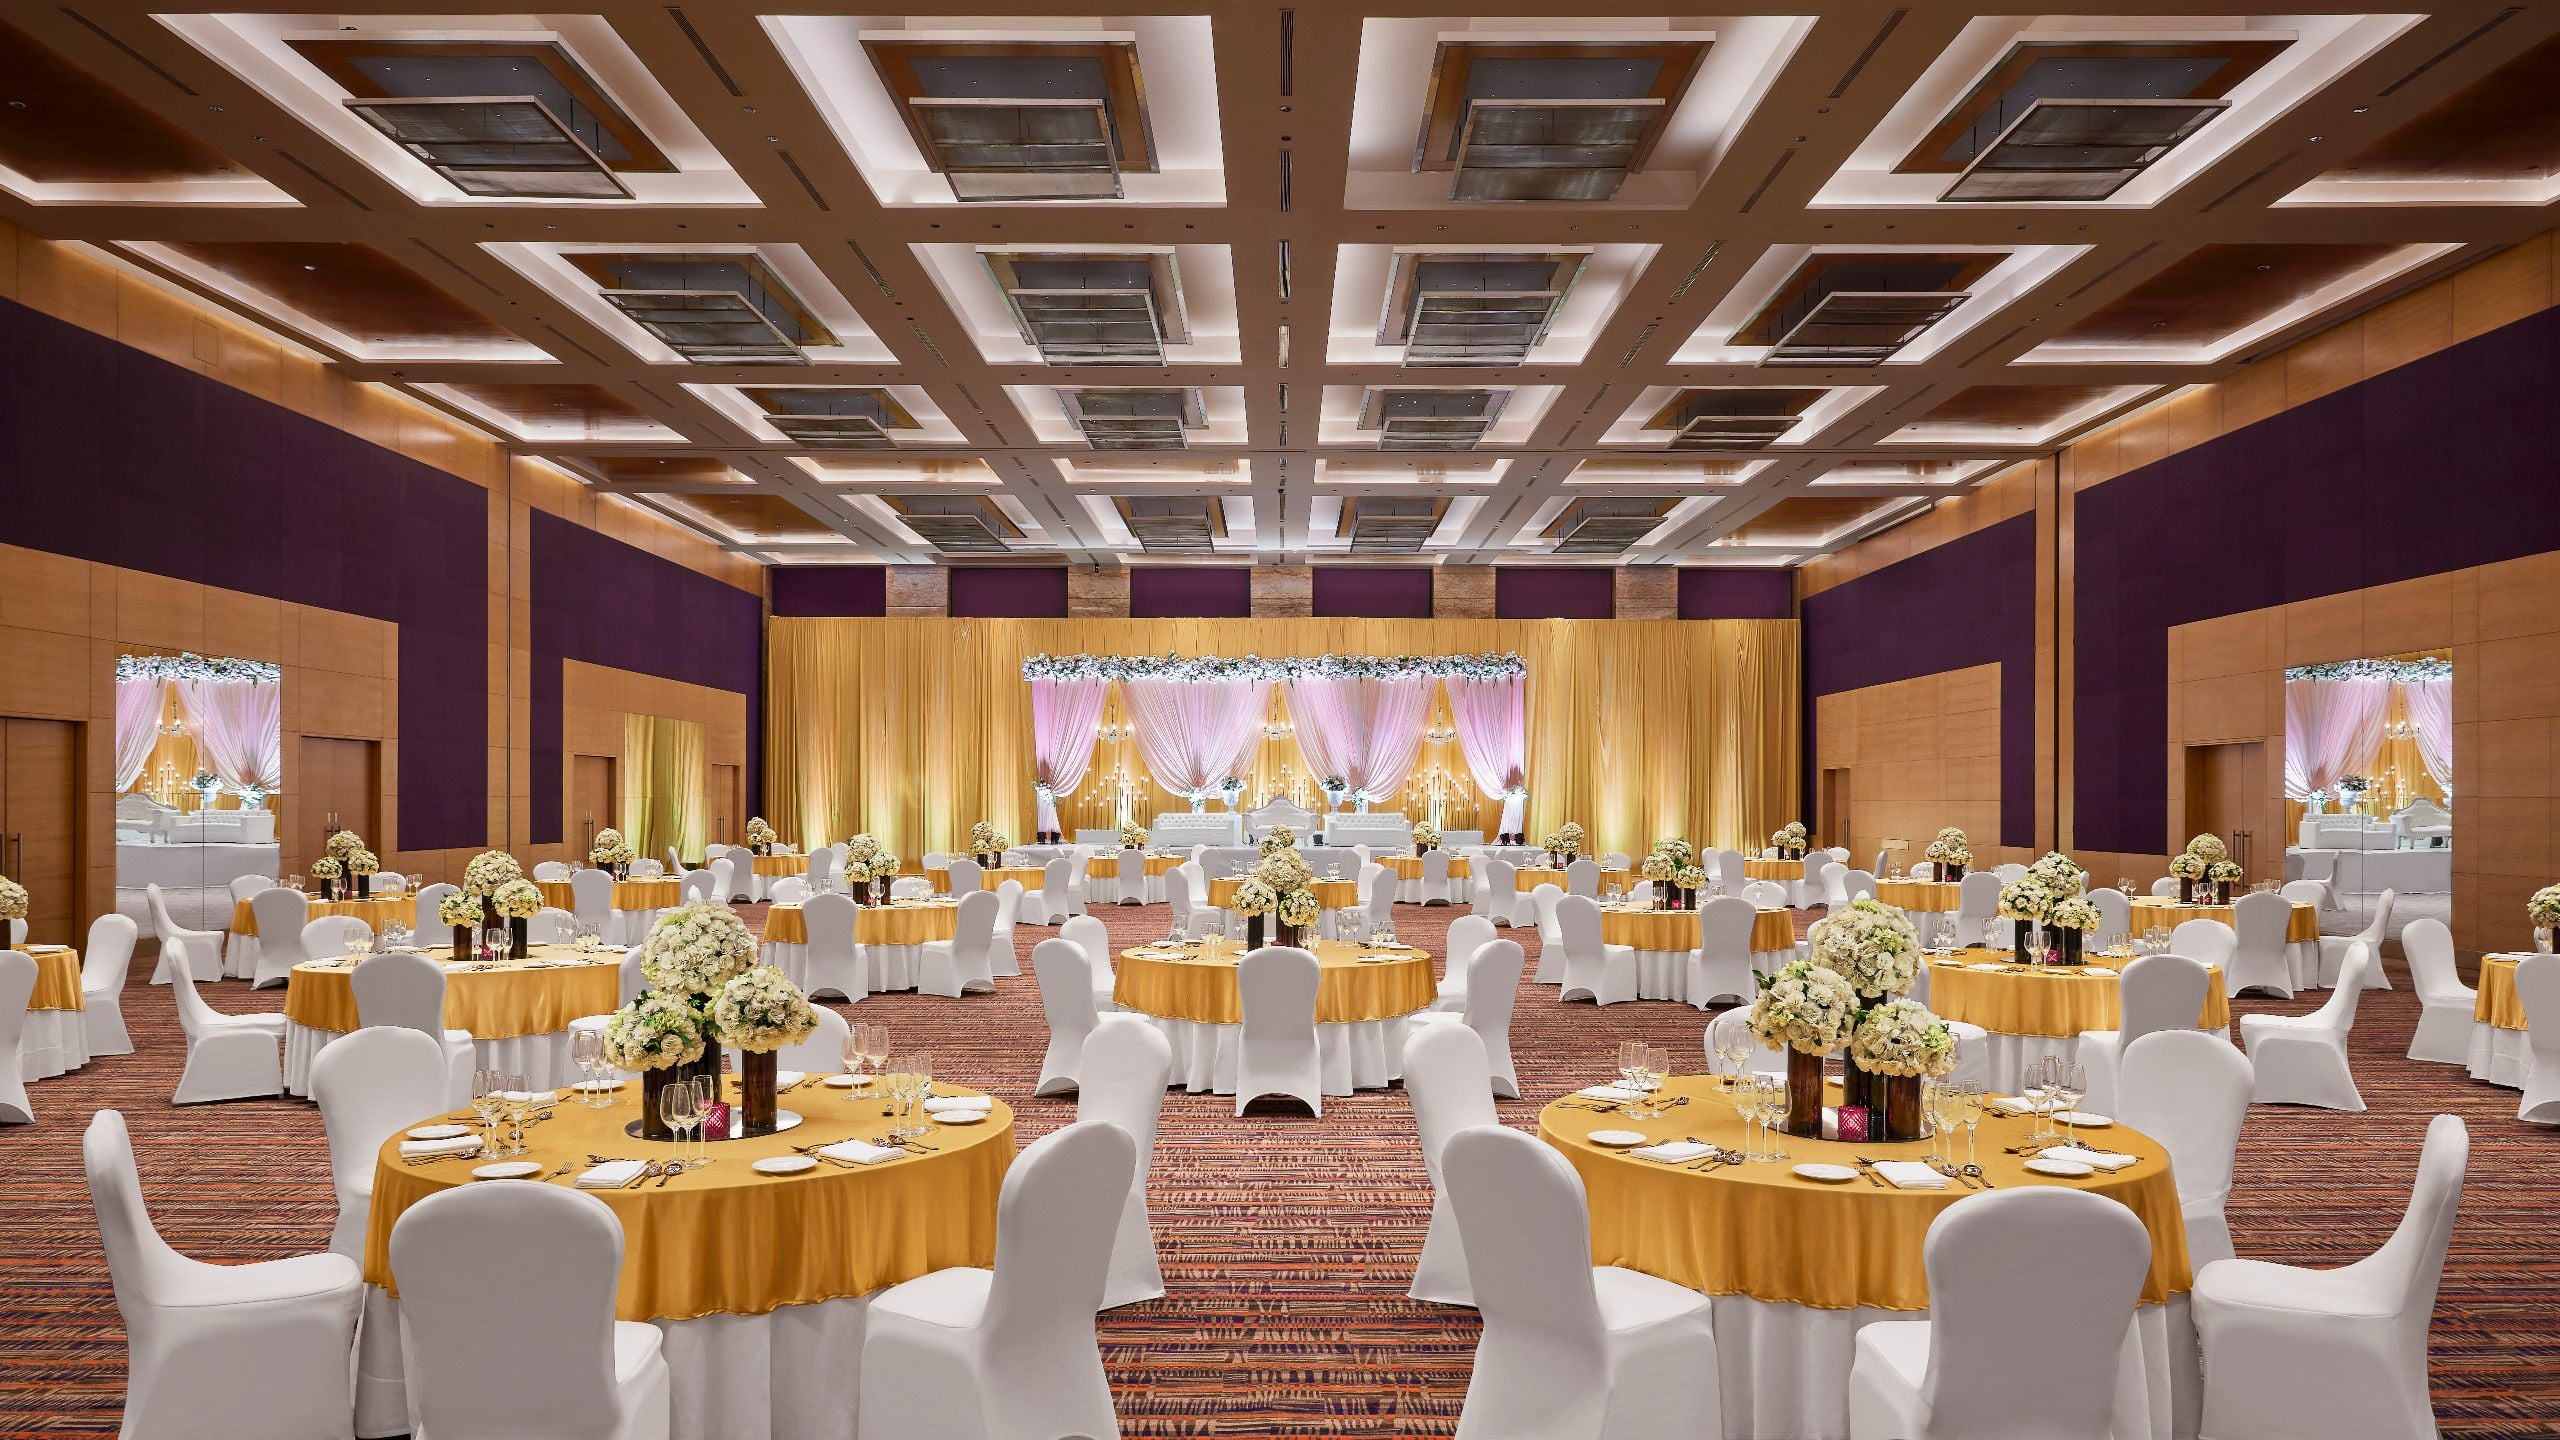 Grand Hyatt Mumbai Hotel & Residences Ballroom Dining Tables Chairs